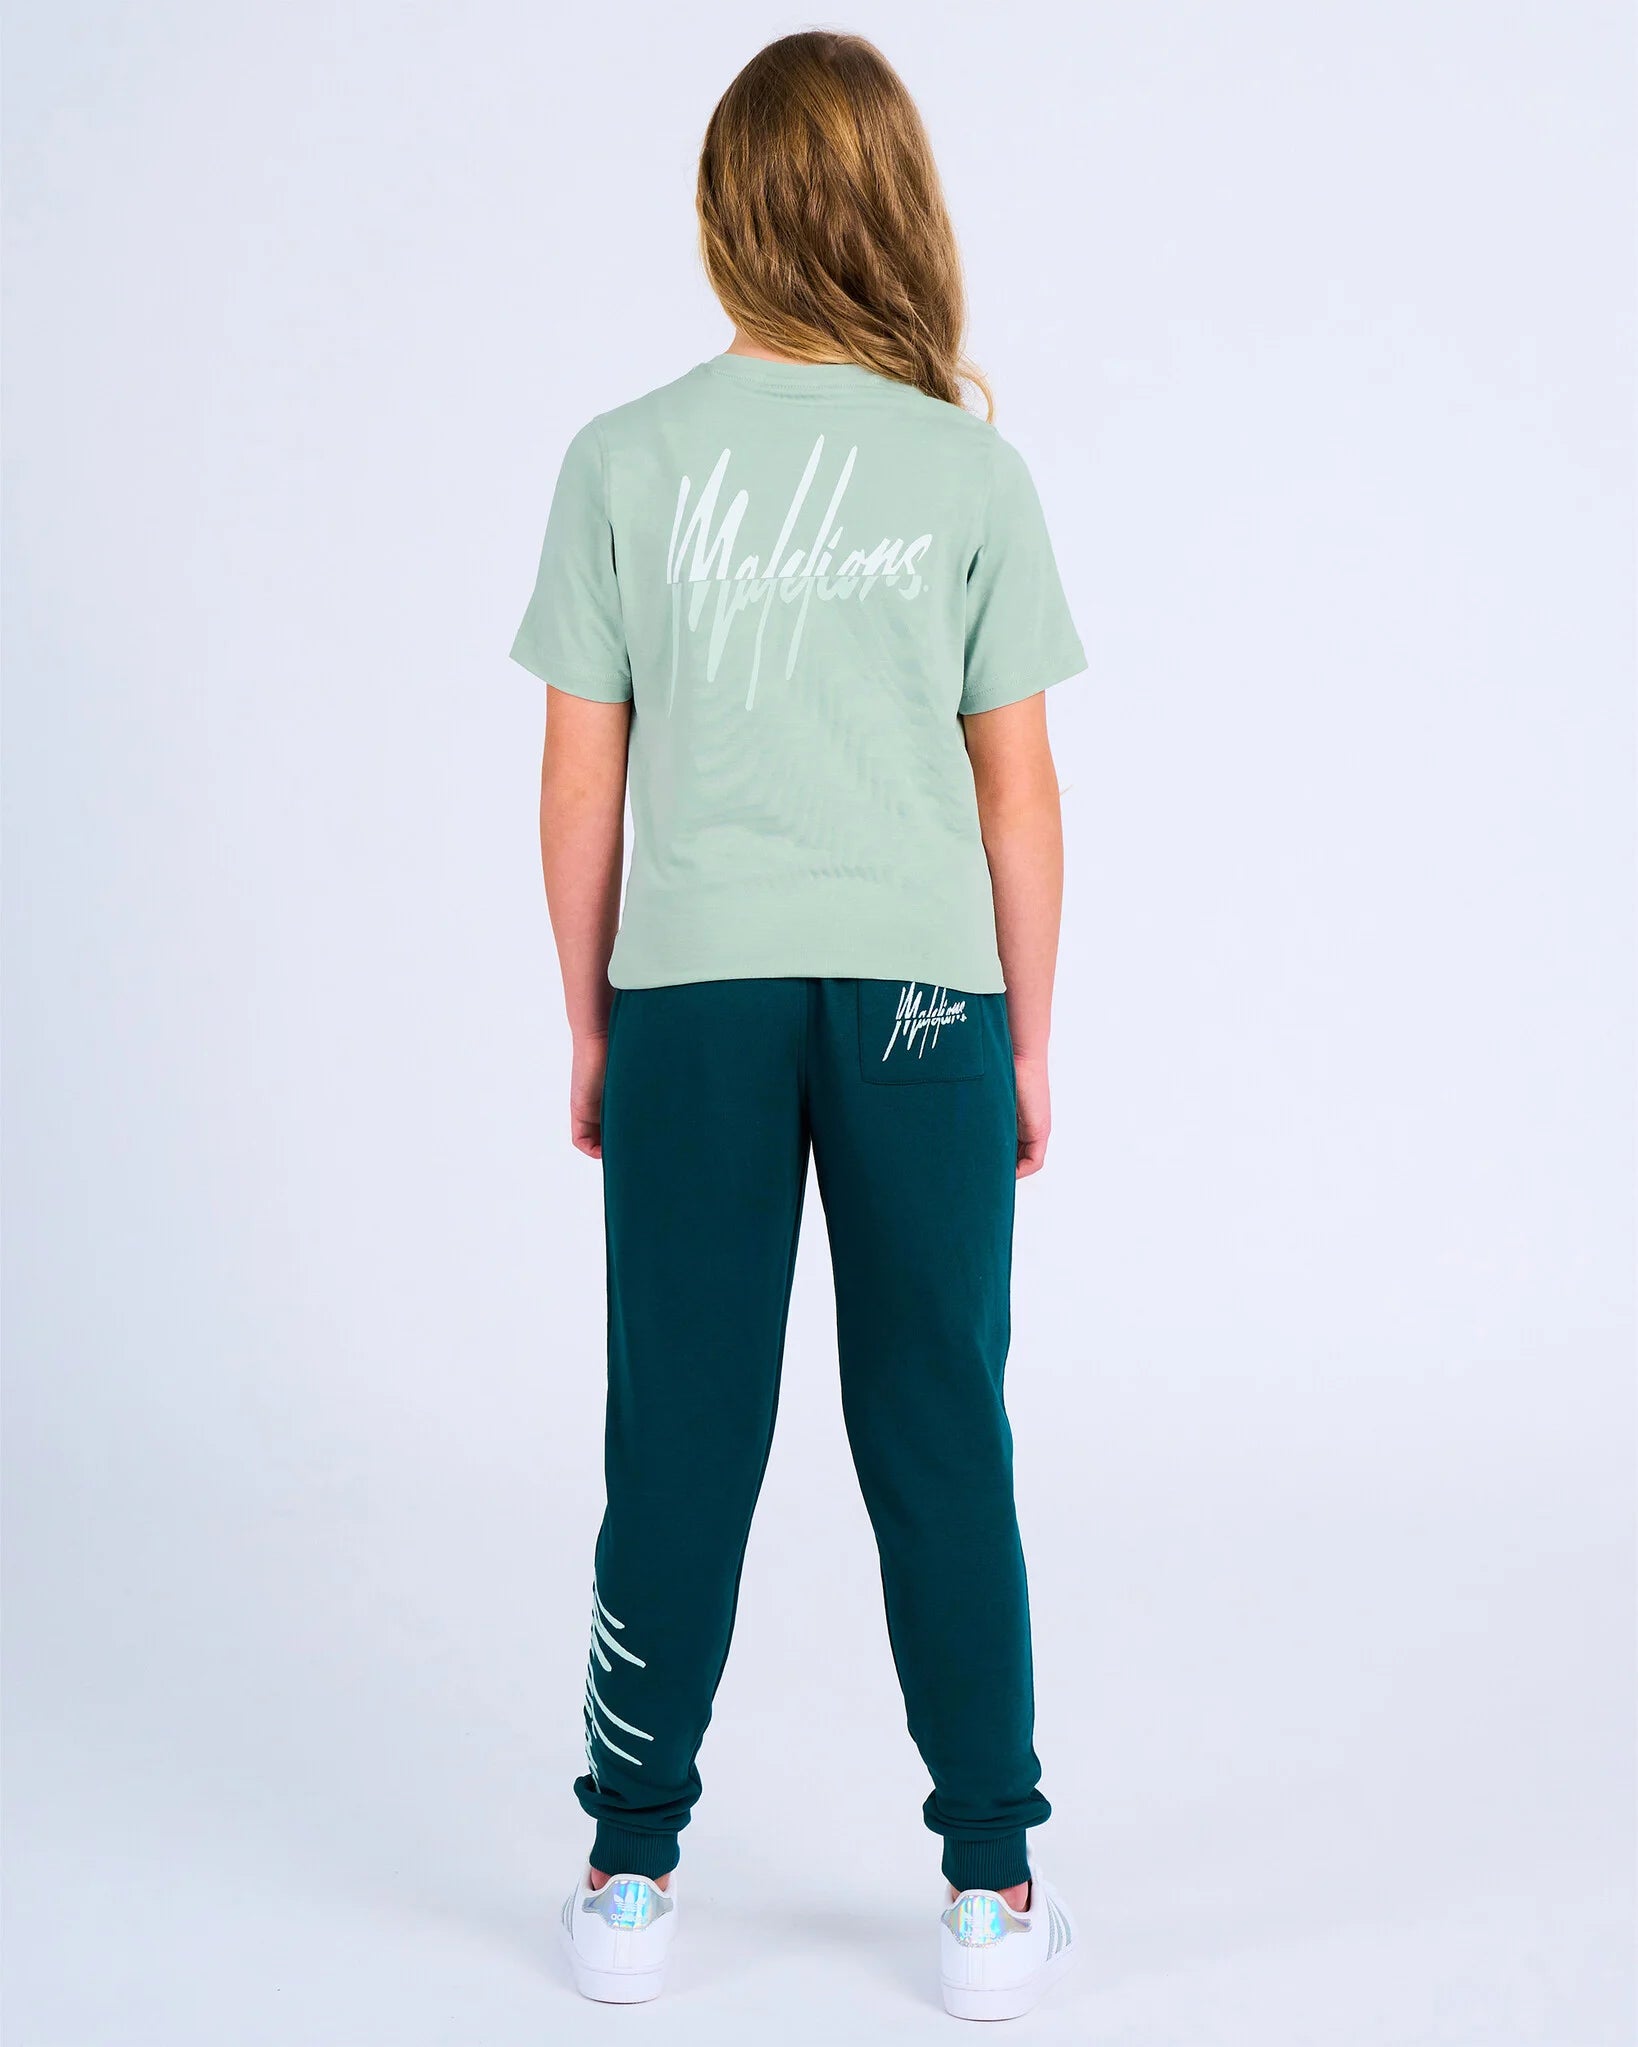 Malelions Malelions Junior Split T-Shirt